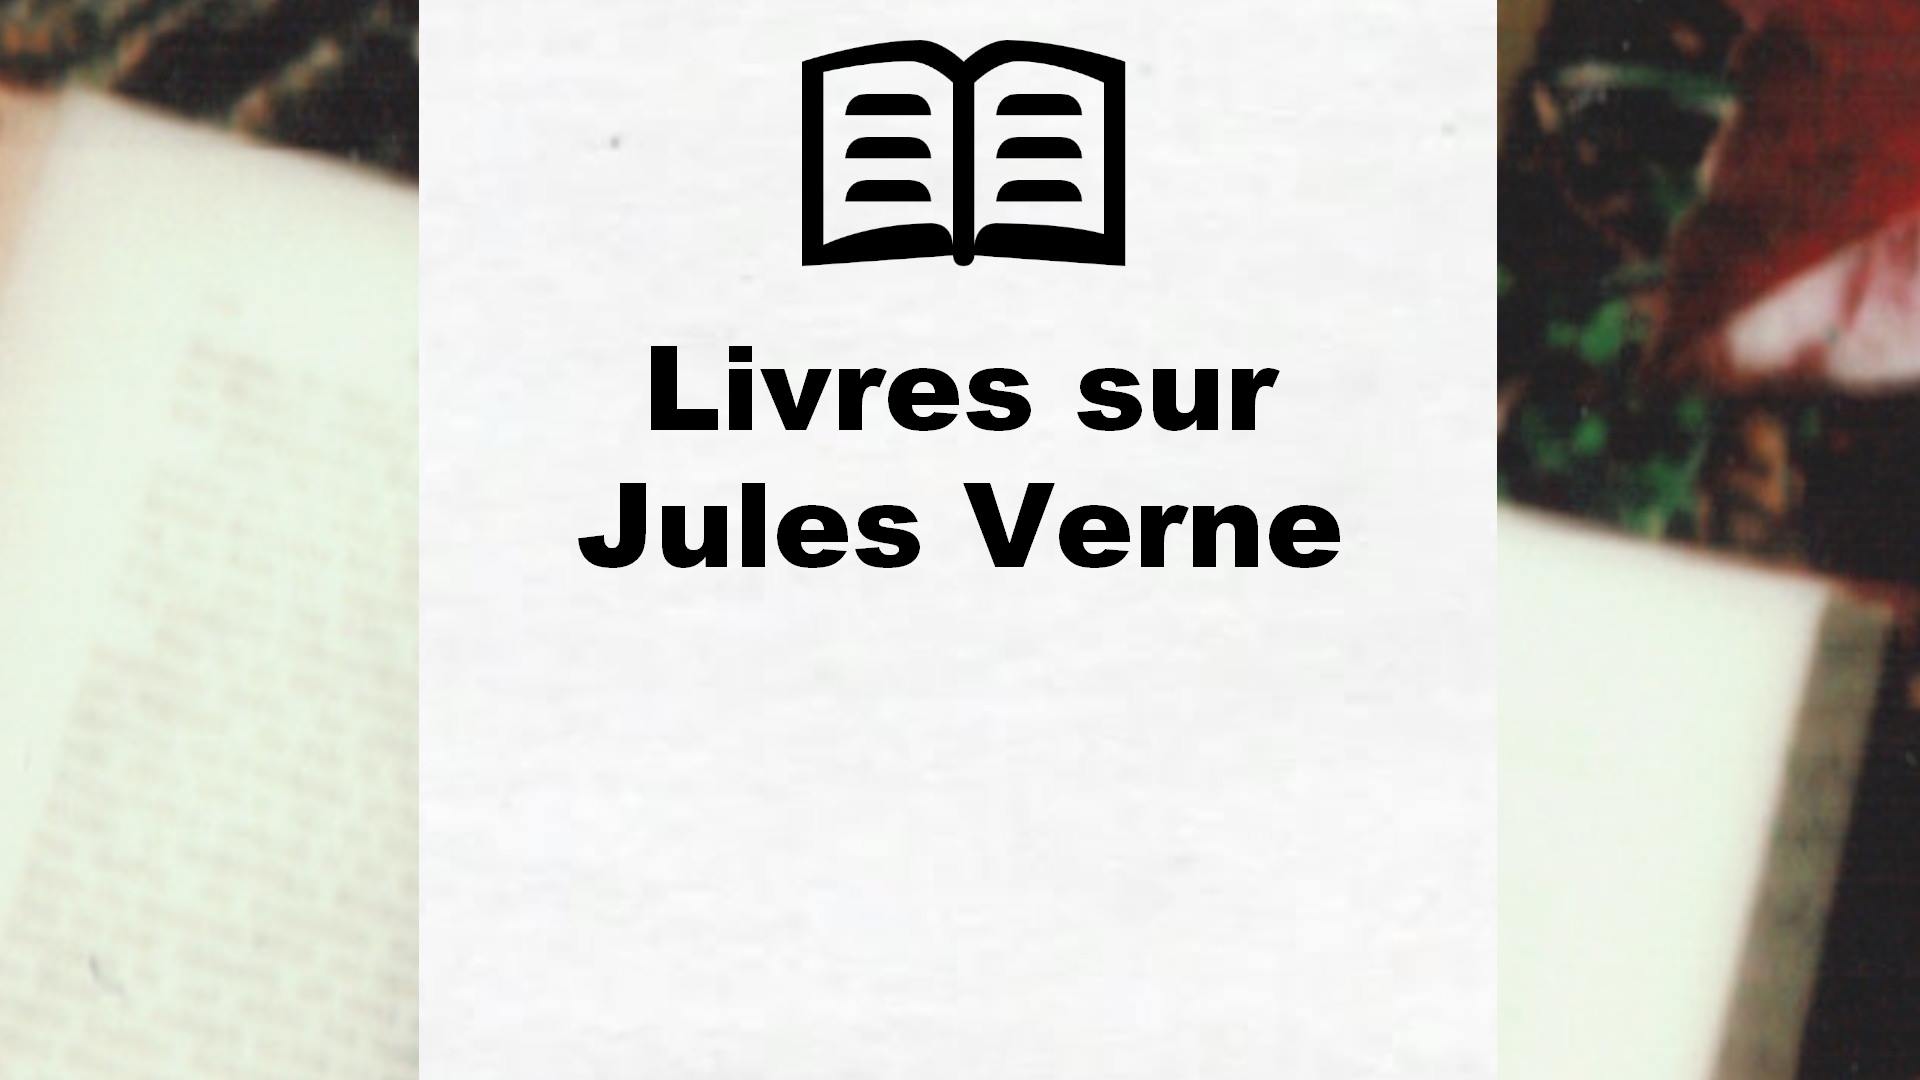 Livres sur Jules Verne